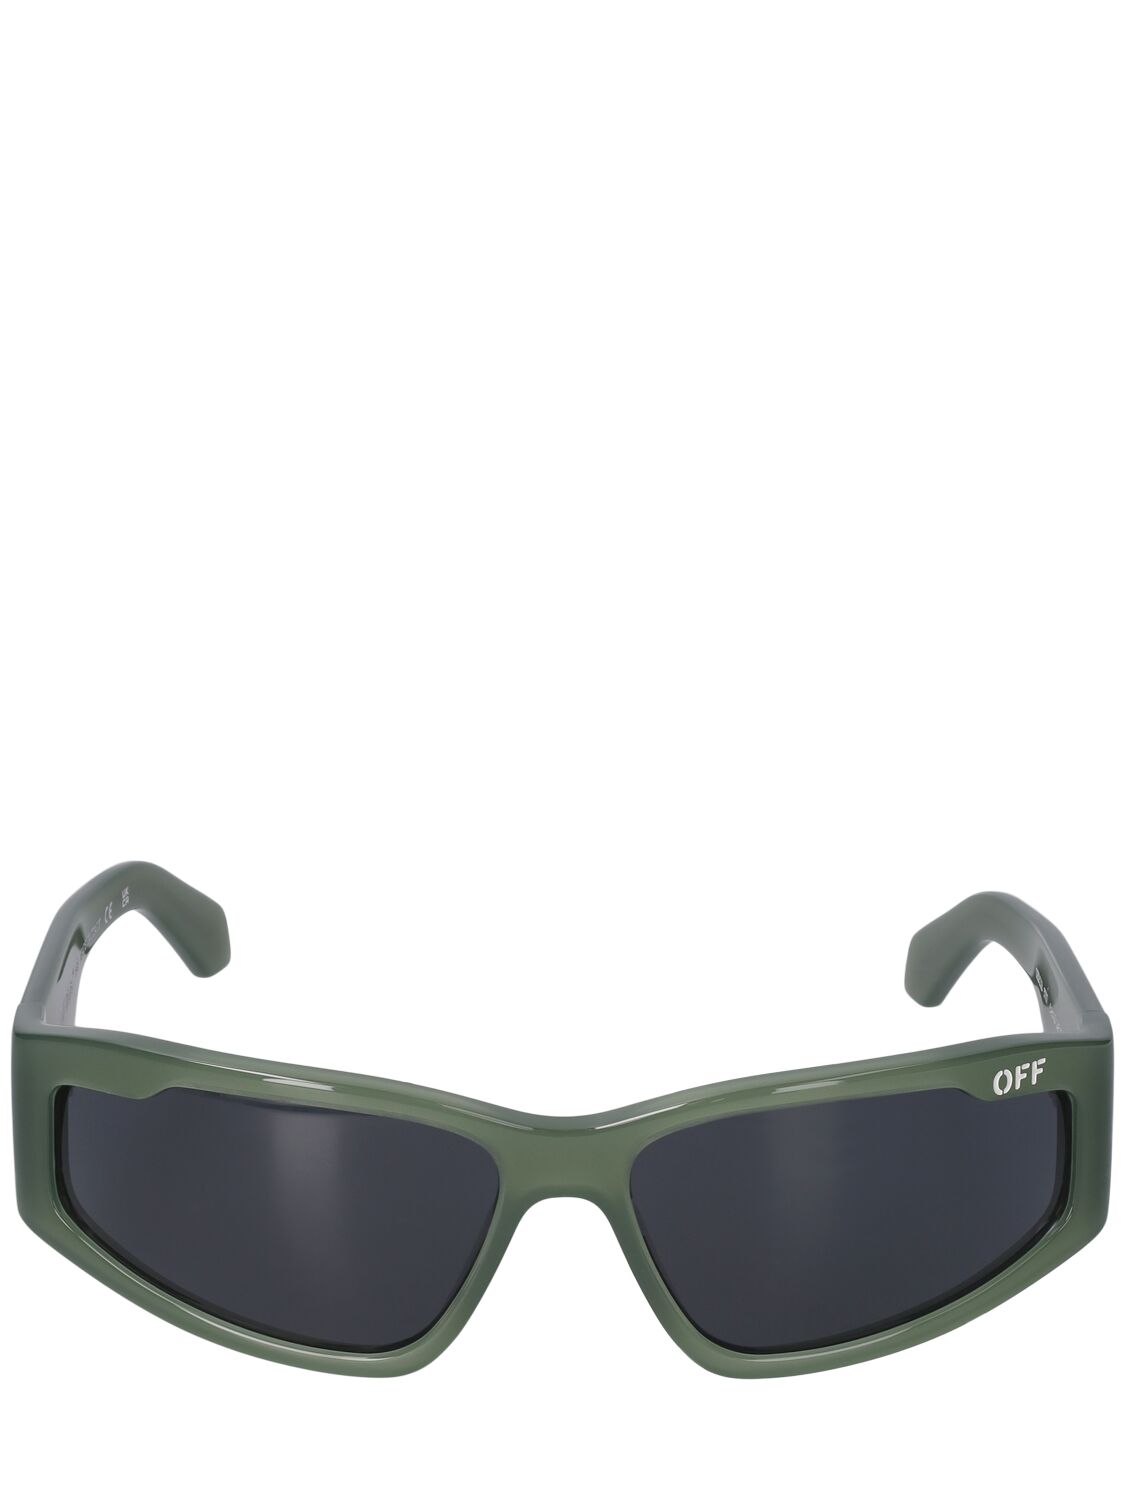 Image of Kimball Acetate Sunglasses